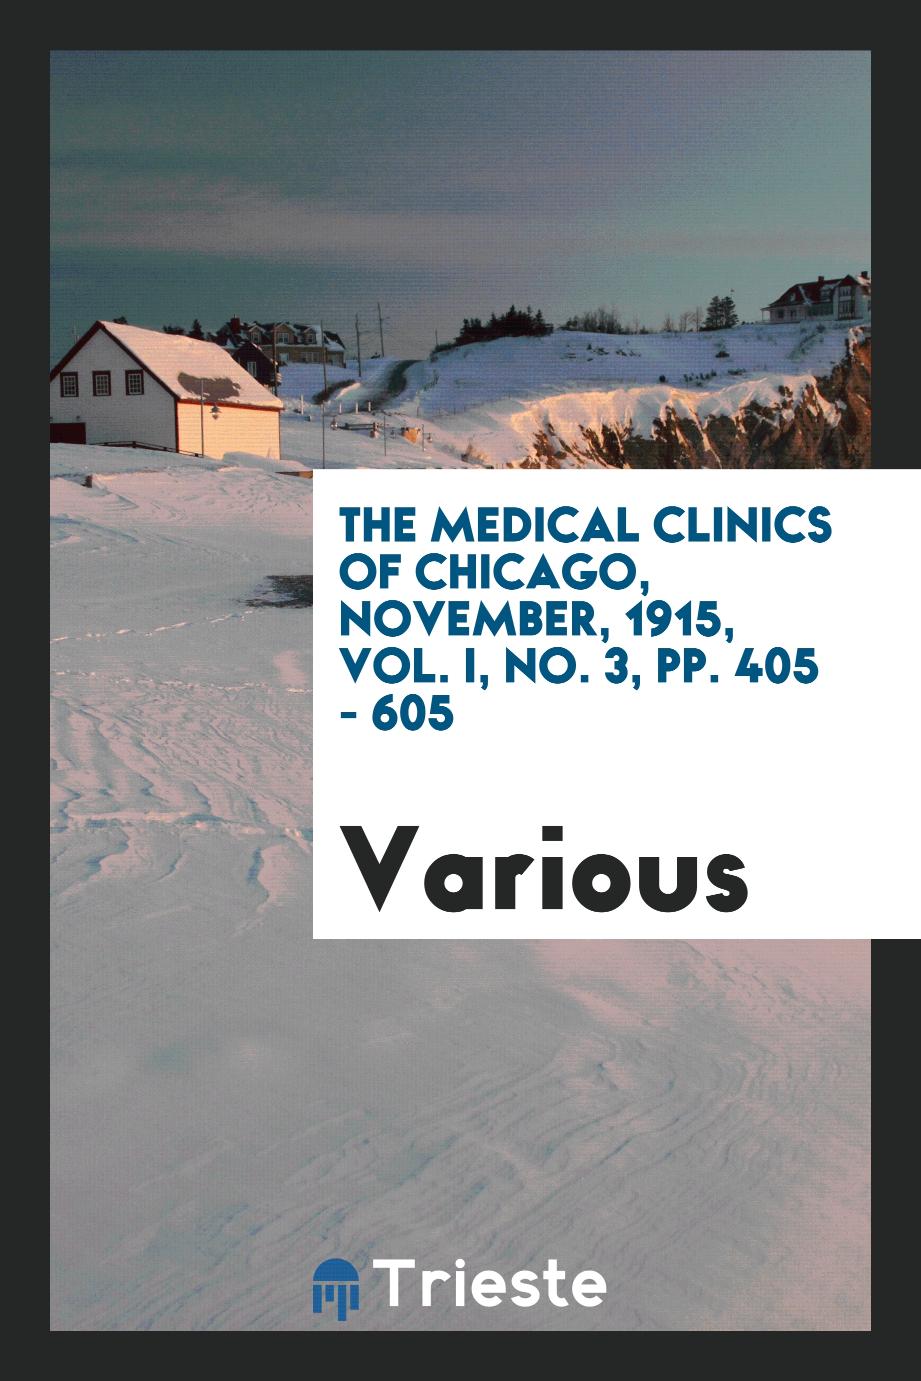 The Medical clinics of Chicago, november, 1915, Vol. I, No. 3, pp. 405 - 605